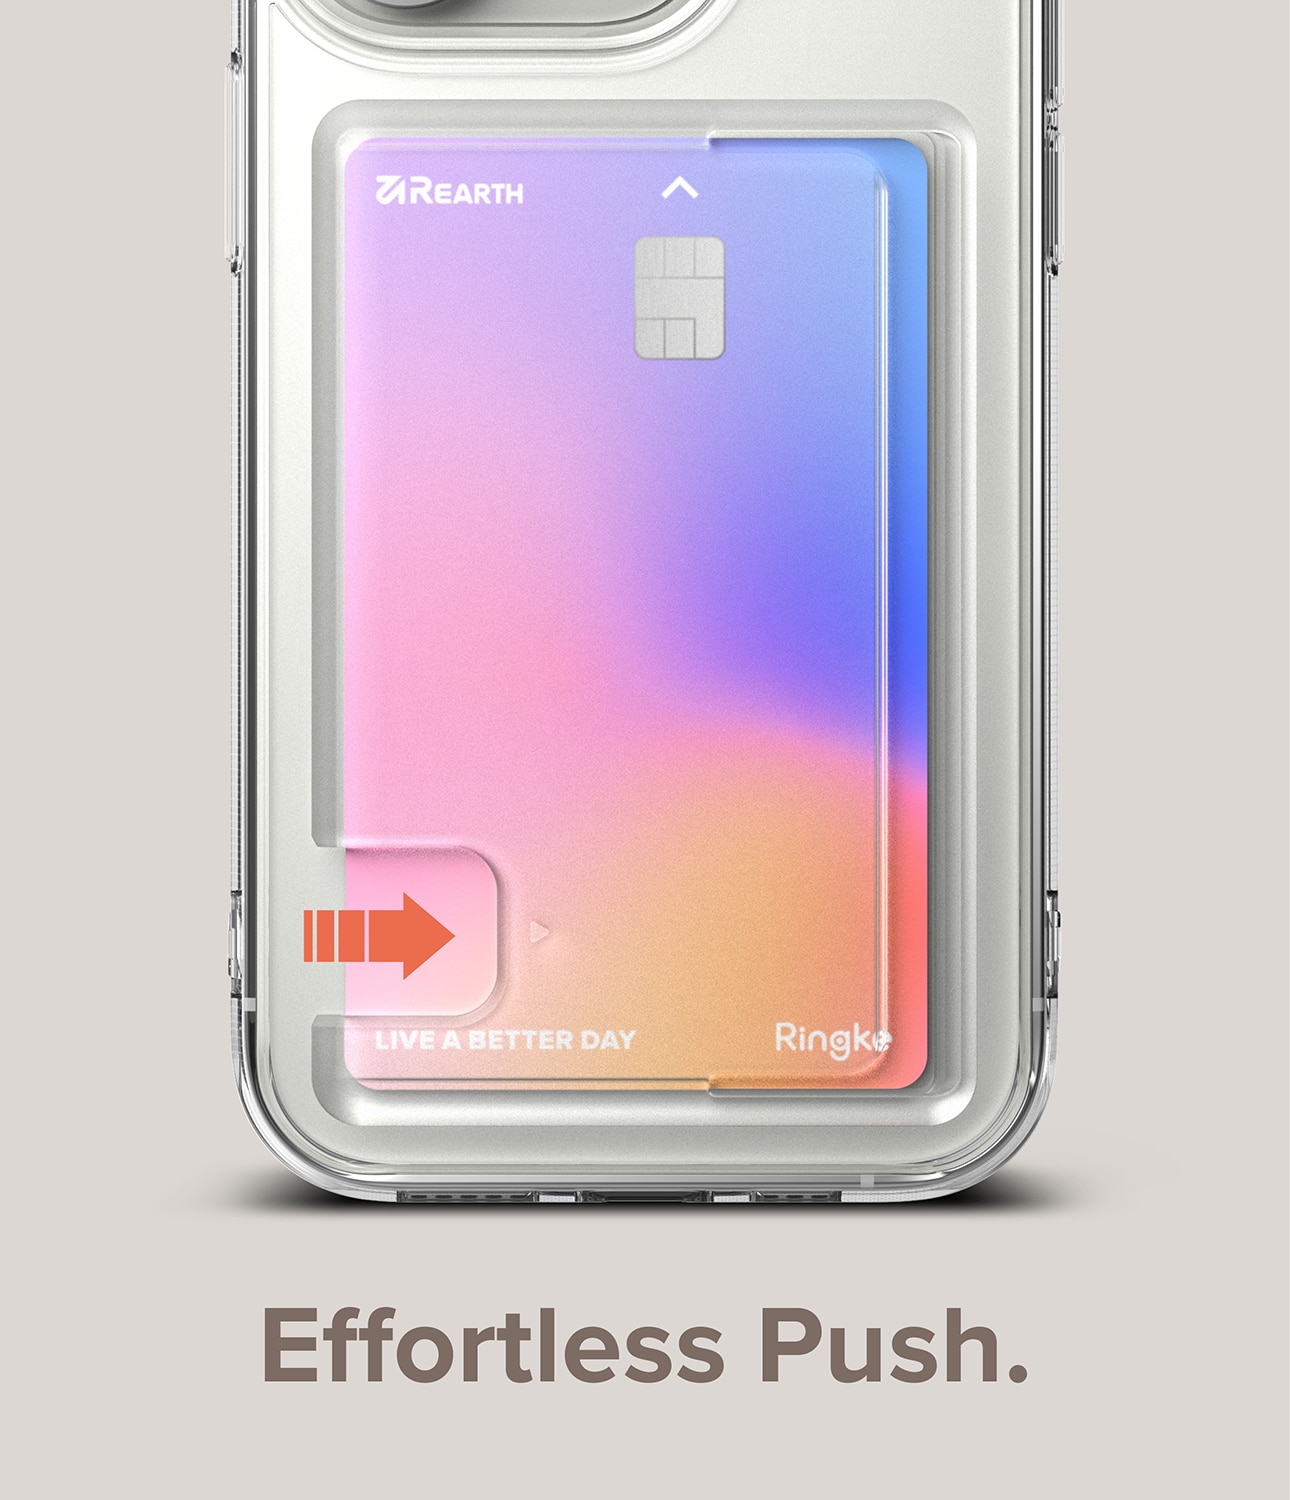 iPhone 14 Pro Max Fusion Card Case Transparent